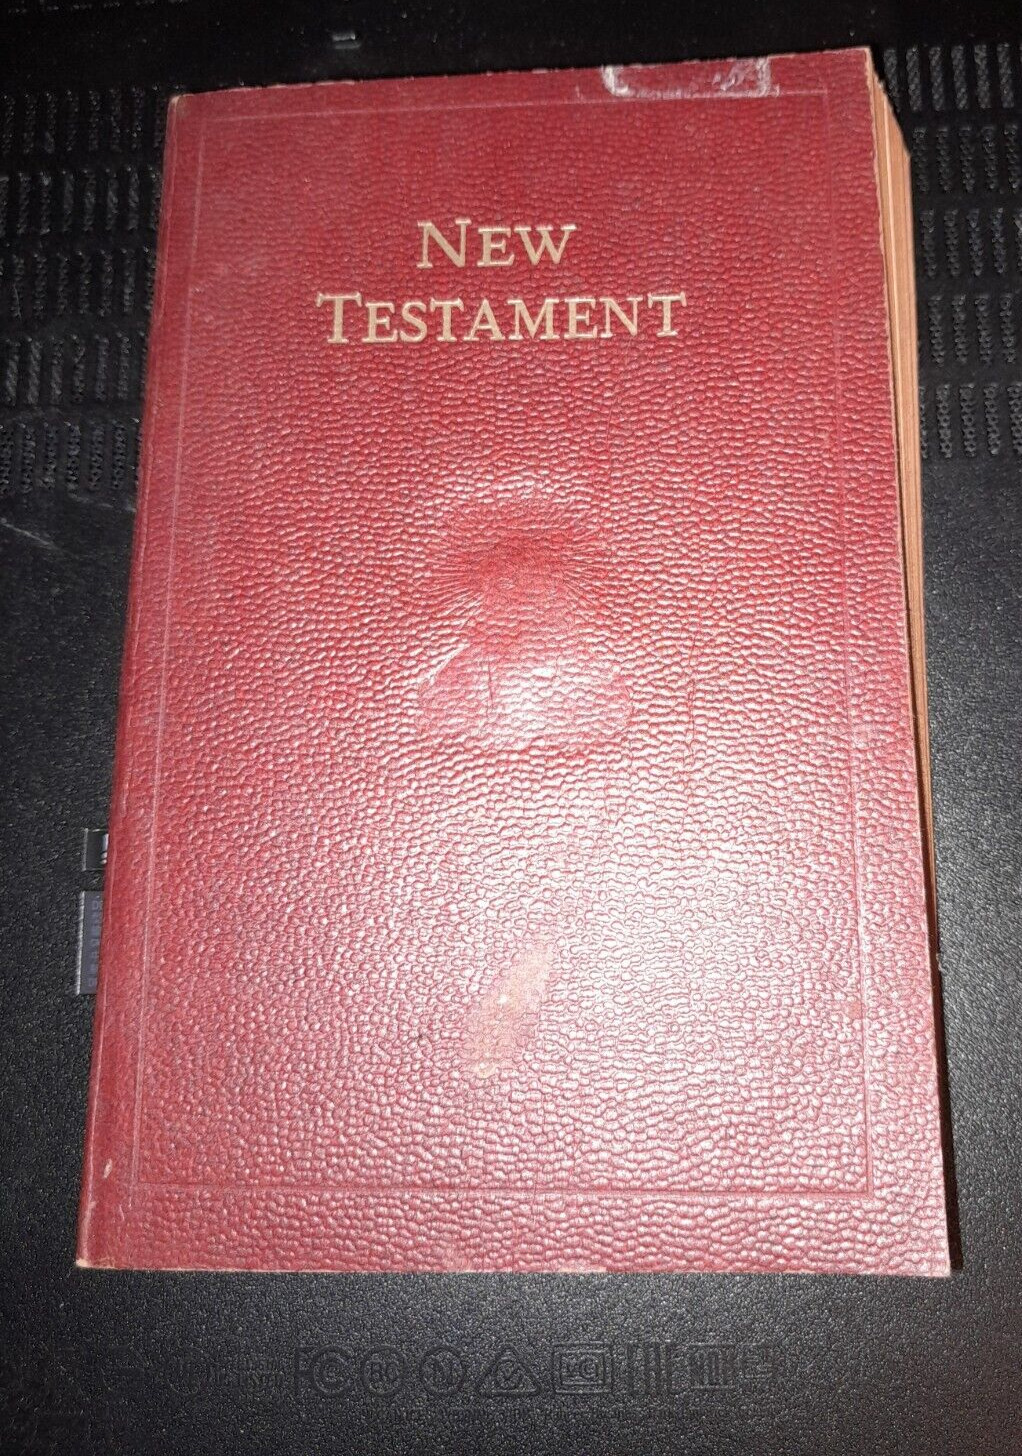 New Testament Vintage Book